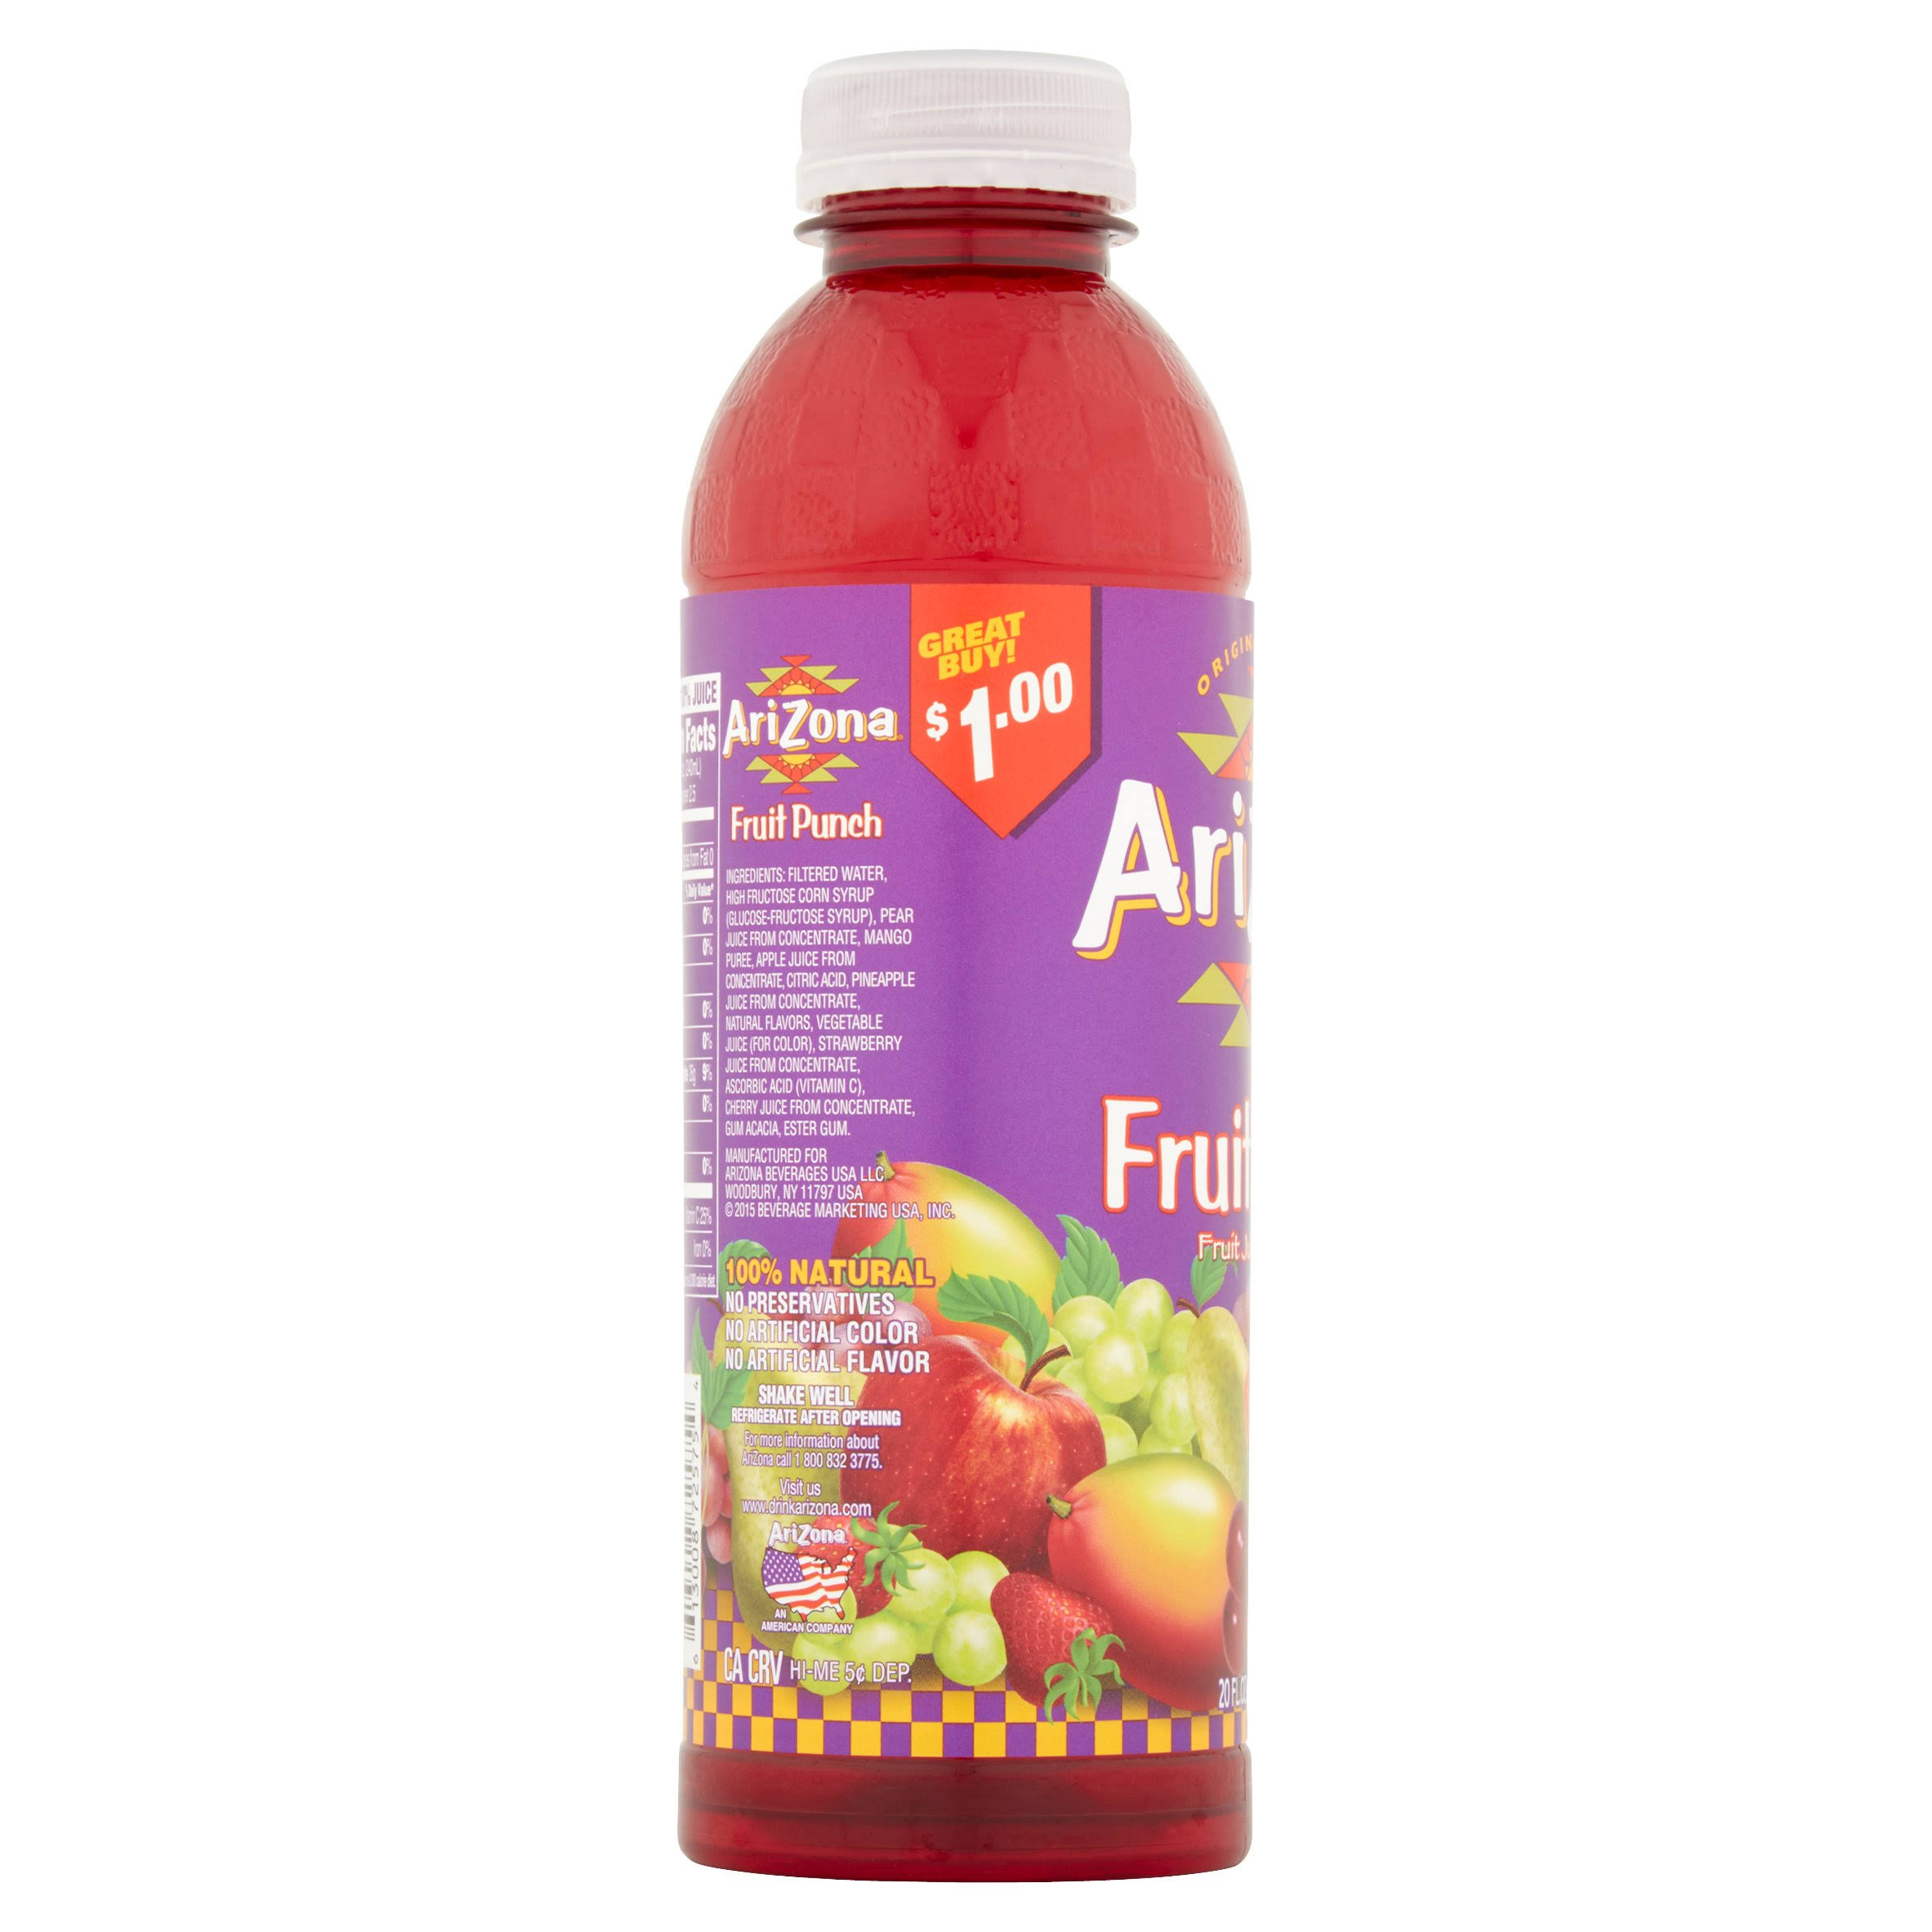 Arizona Original Brand Fruit Punch Fruit Juice Cocktail - 20oz